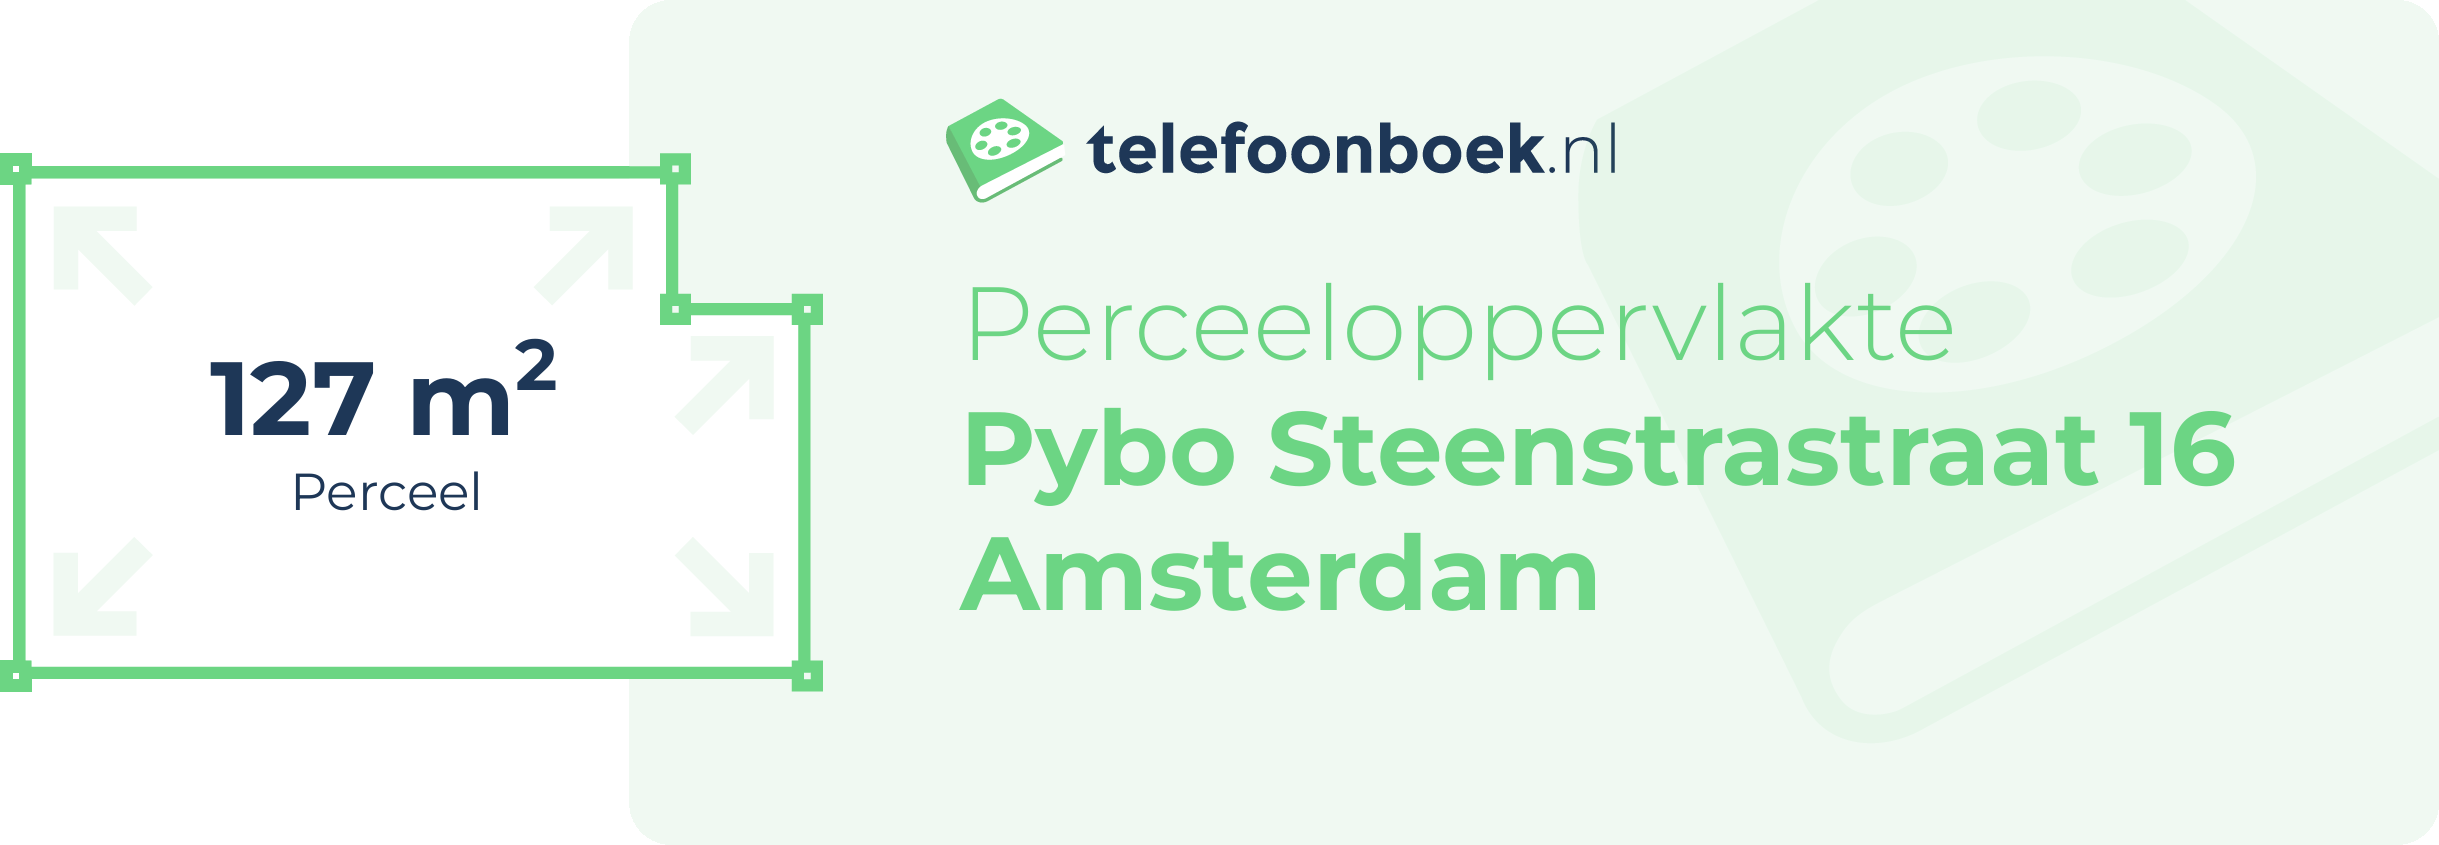 Perceeloppervlakte Pybo Steenstrastraat 16 Amsterdam